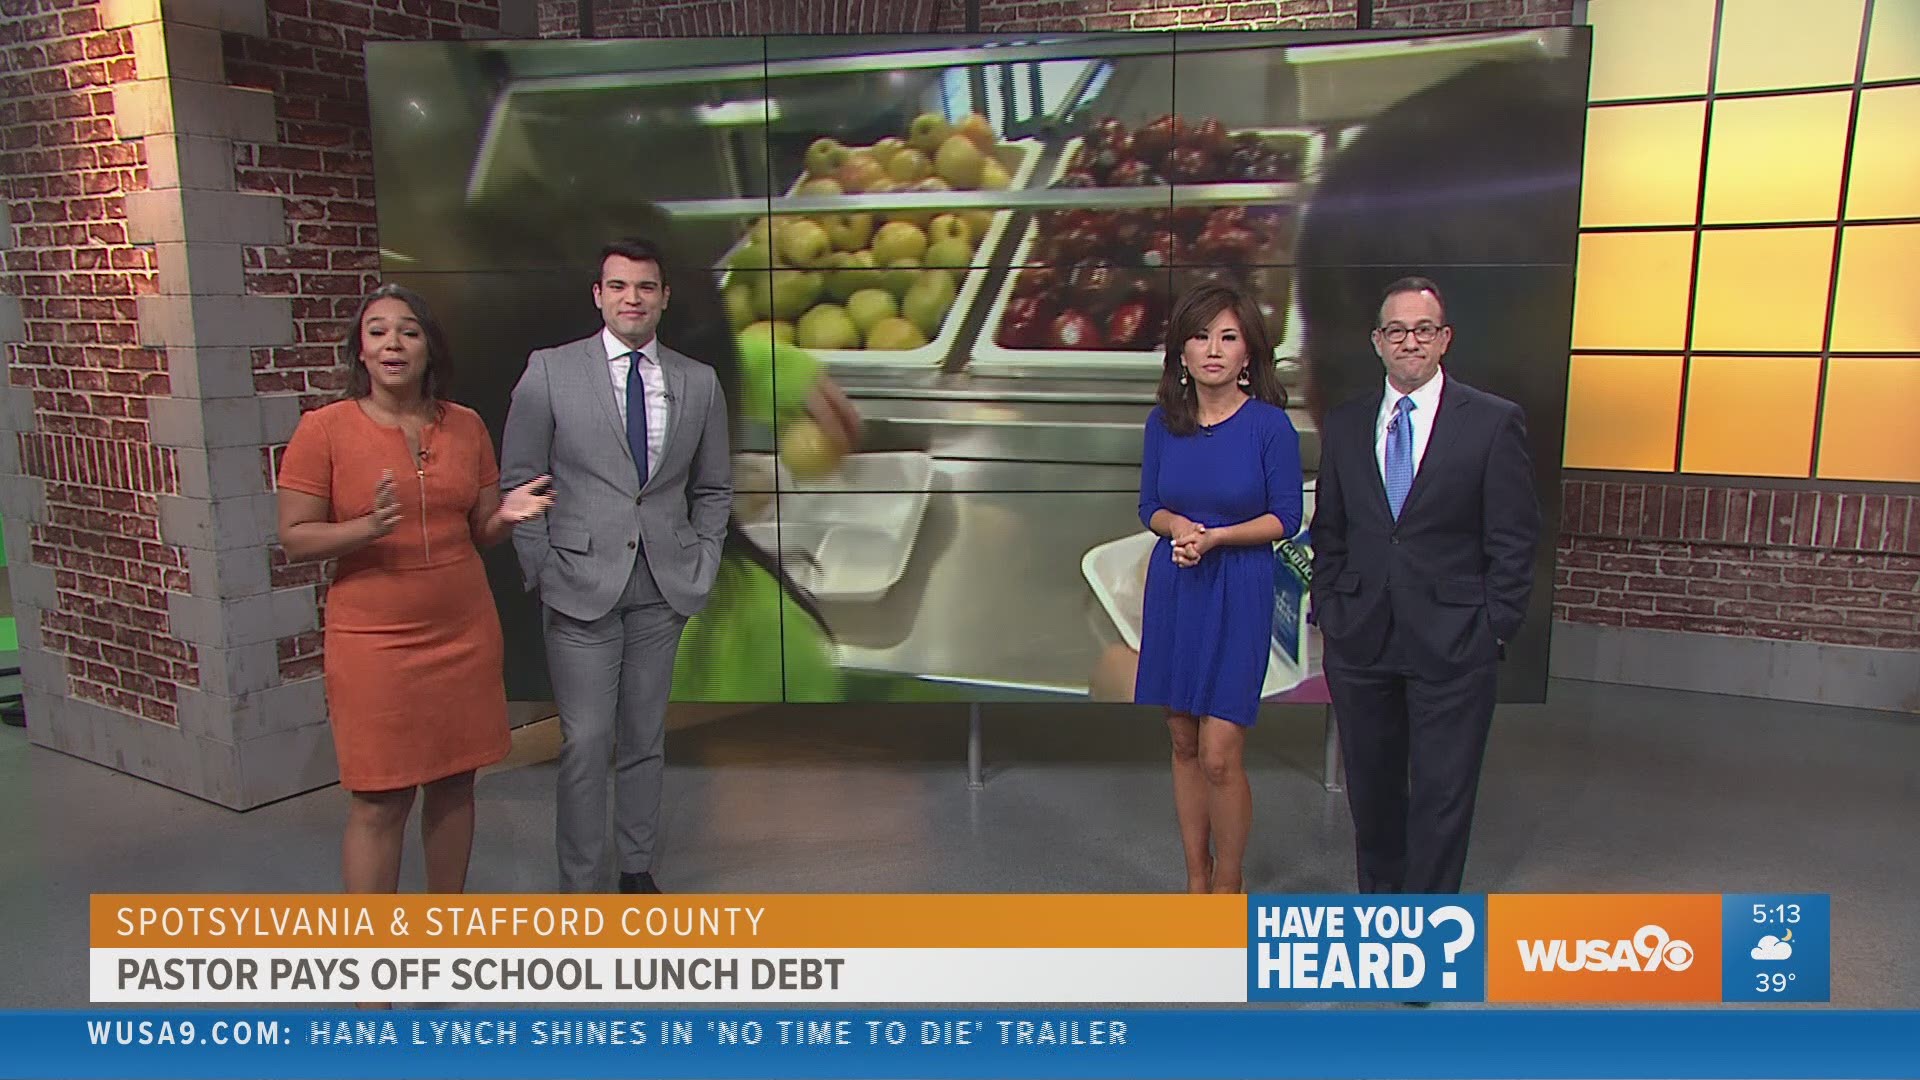 A Virginia church pays off nearly $18,000 in school lunch debt